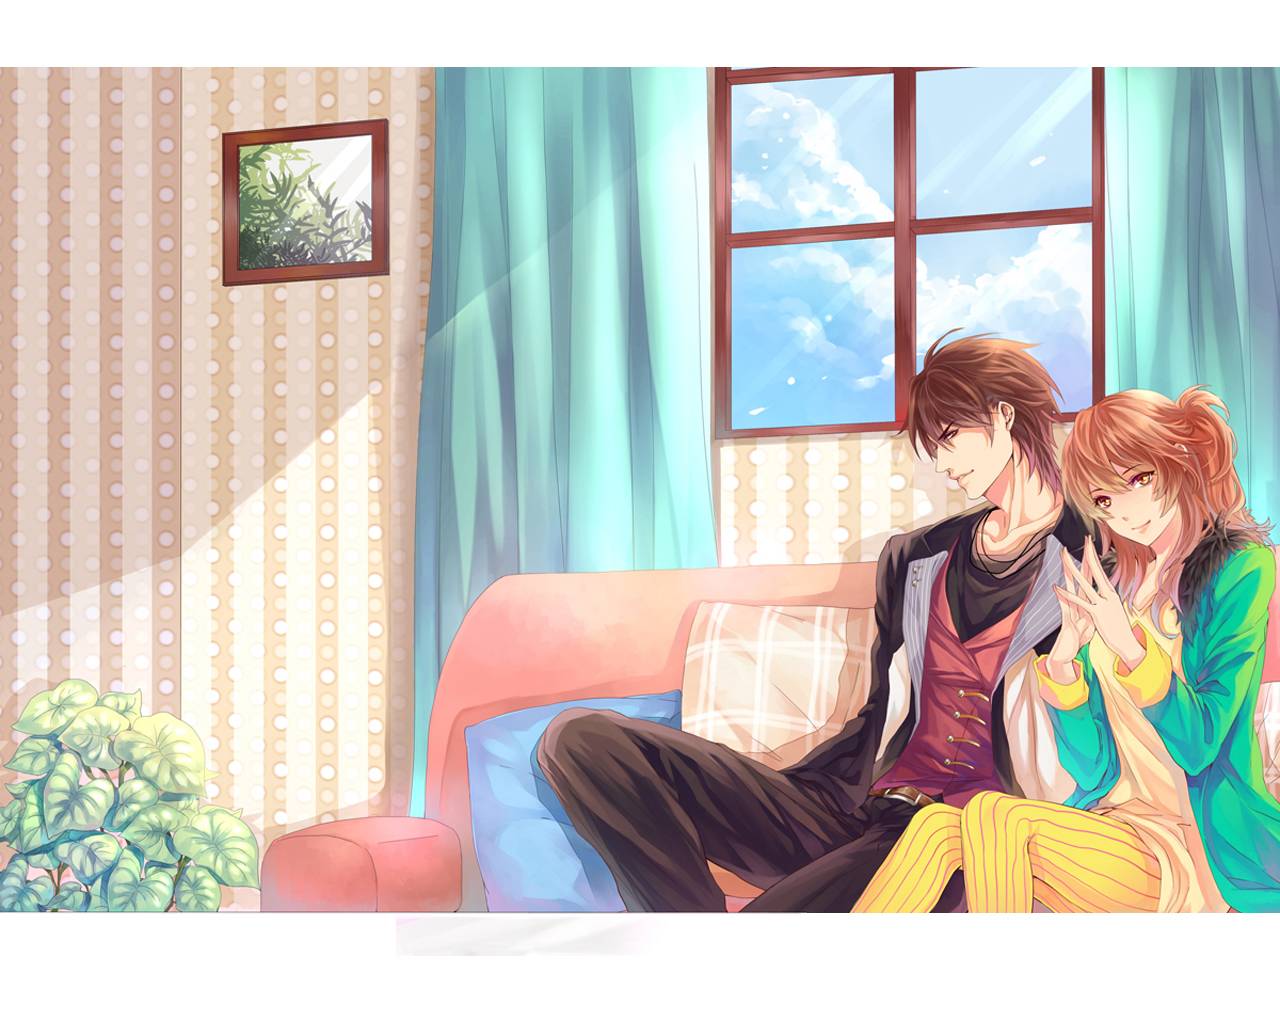 Anime Couple Wallpaper, 37 Desktop Image of Anime Couple